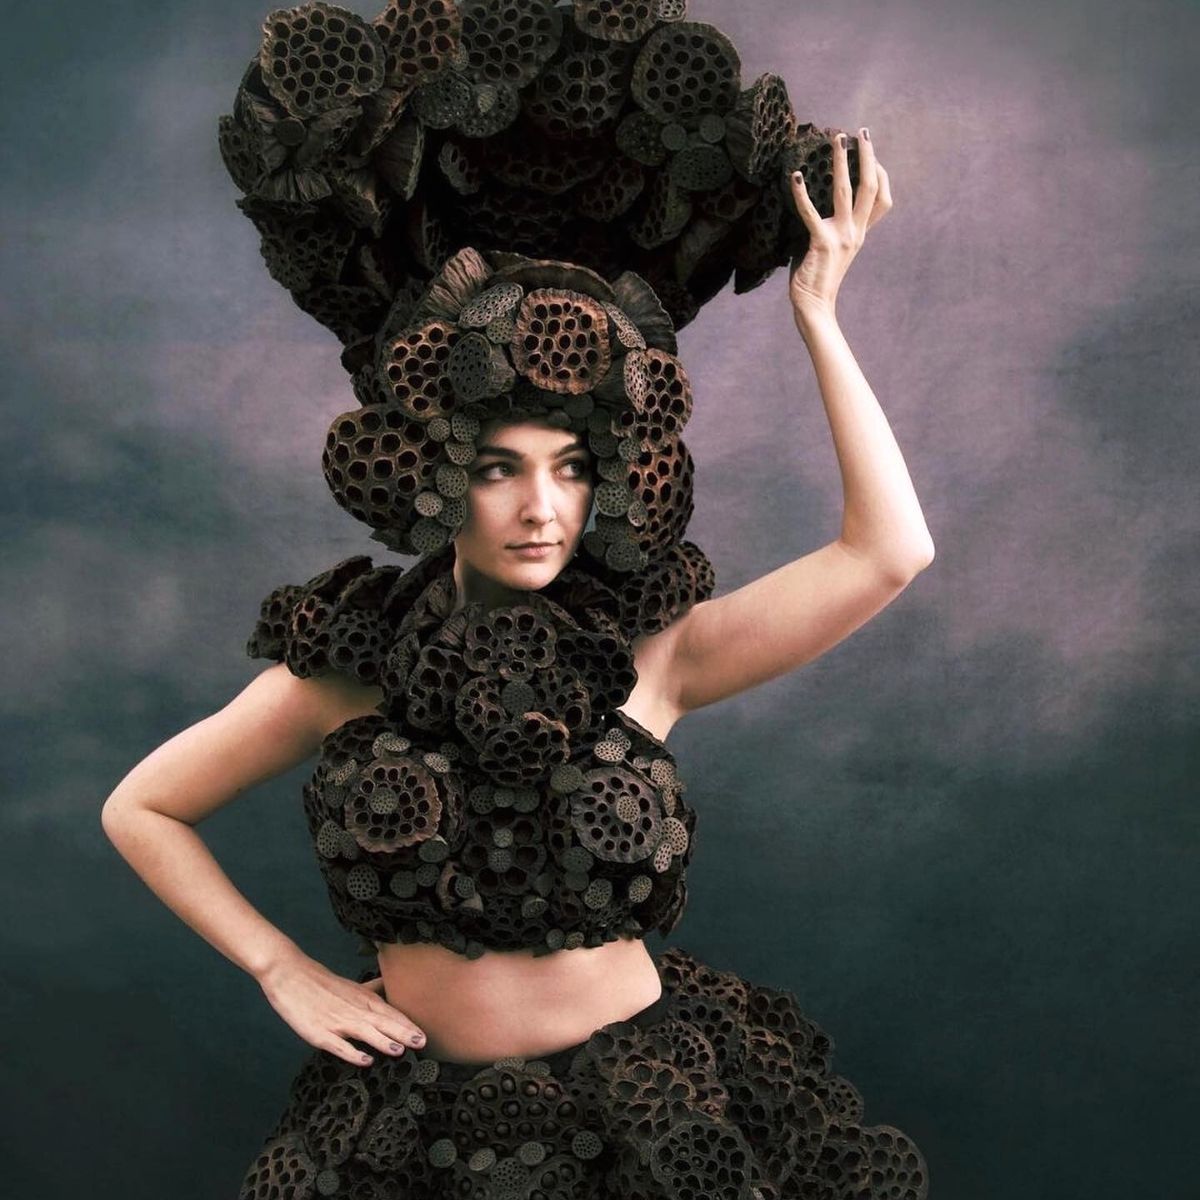 dried-flower-skins-created-by-brazilian-artist-melissa-meier-featured